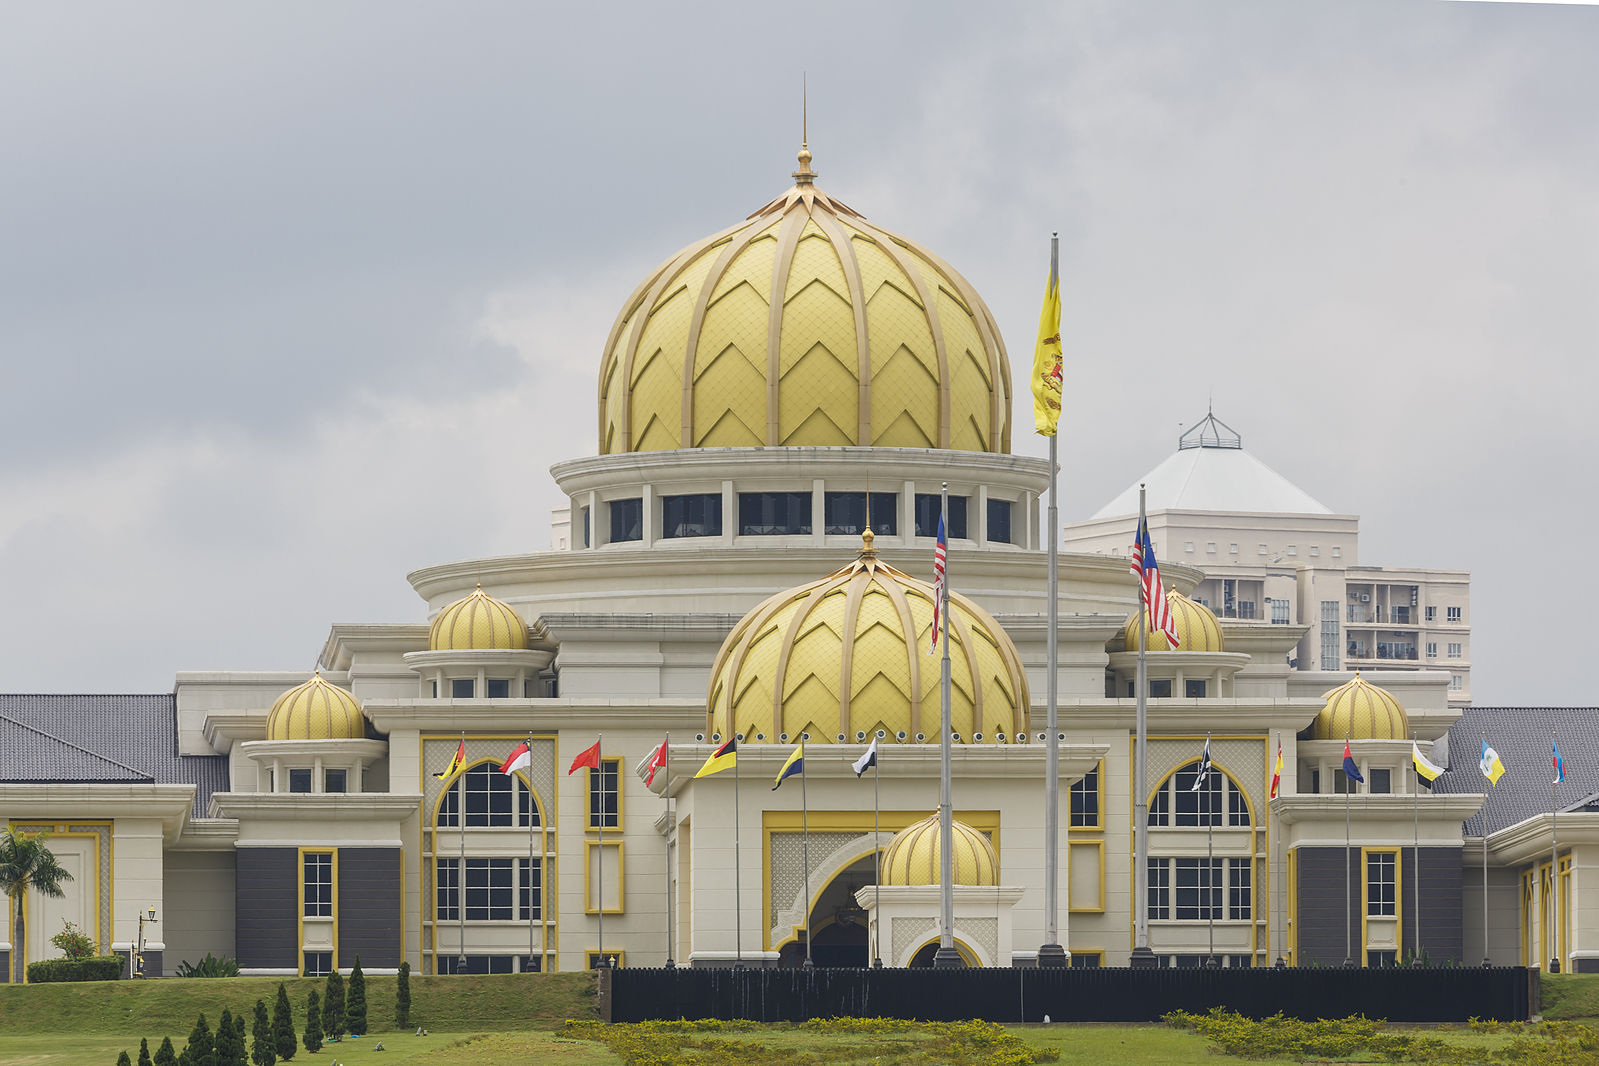 Malaysian Royal Palace. Photo by CEphoto, Uwe Aranas